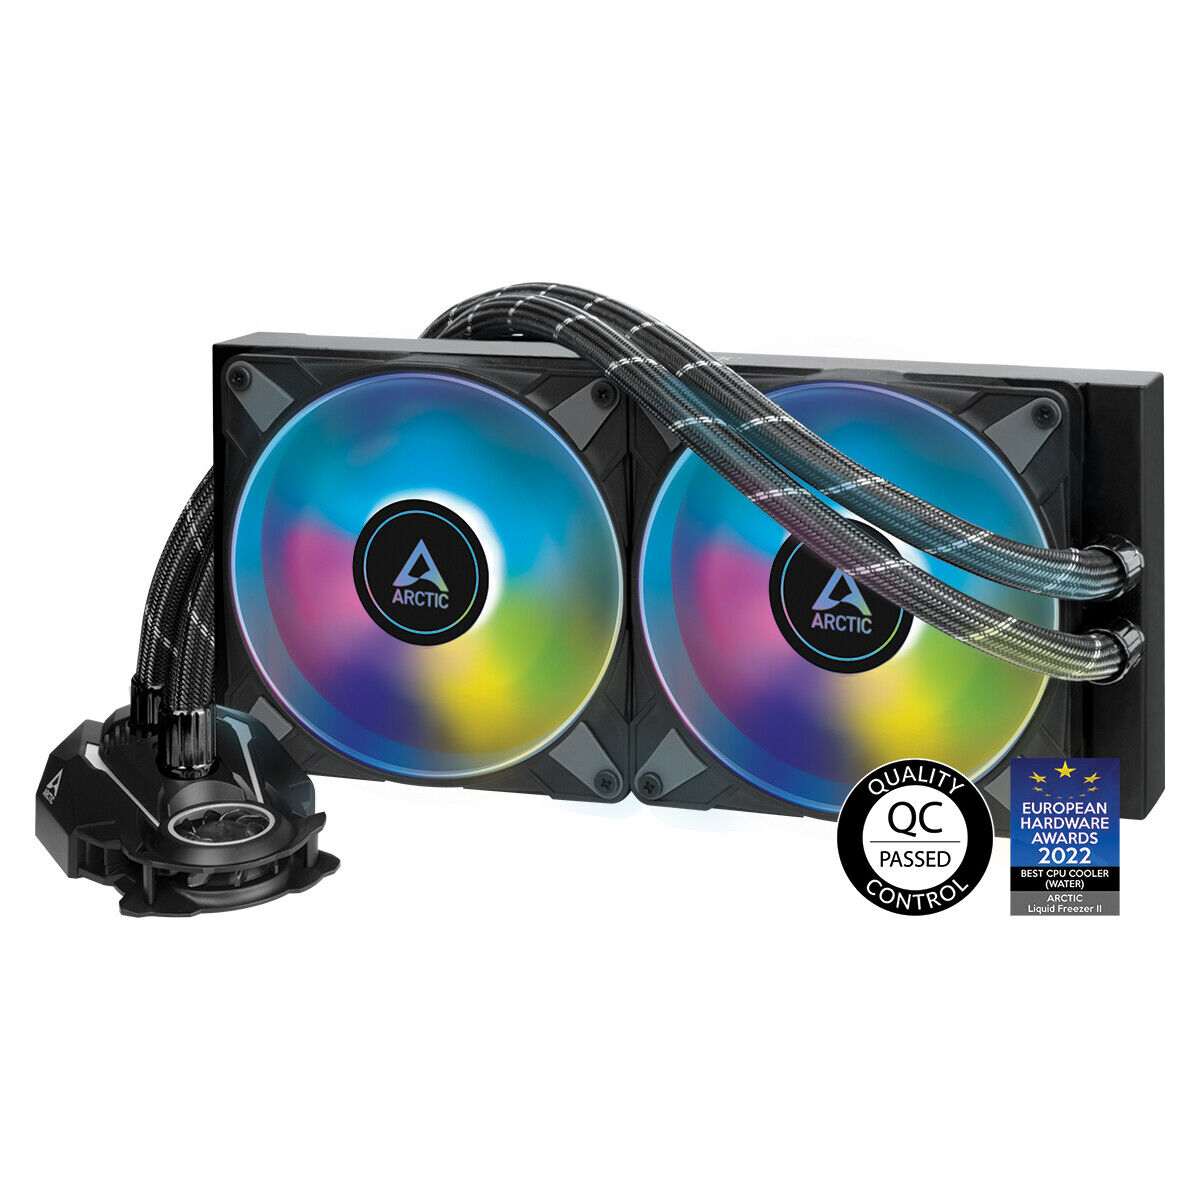 ARCTIC Liquid Freezer II 280 A-RGB Intel AMD AIO CPU Water Cooler PC B-Stock $75 ($60 + $10-15 shipping)